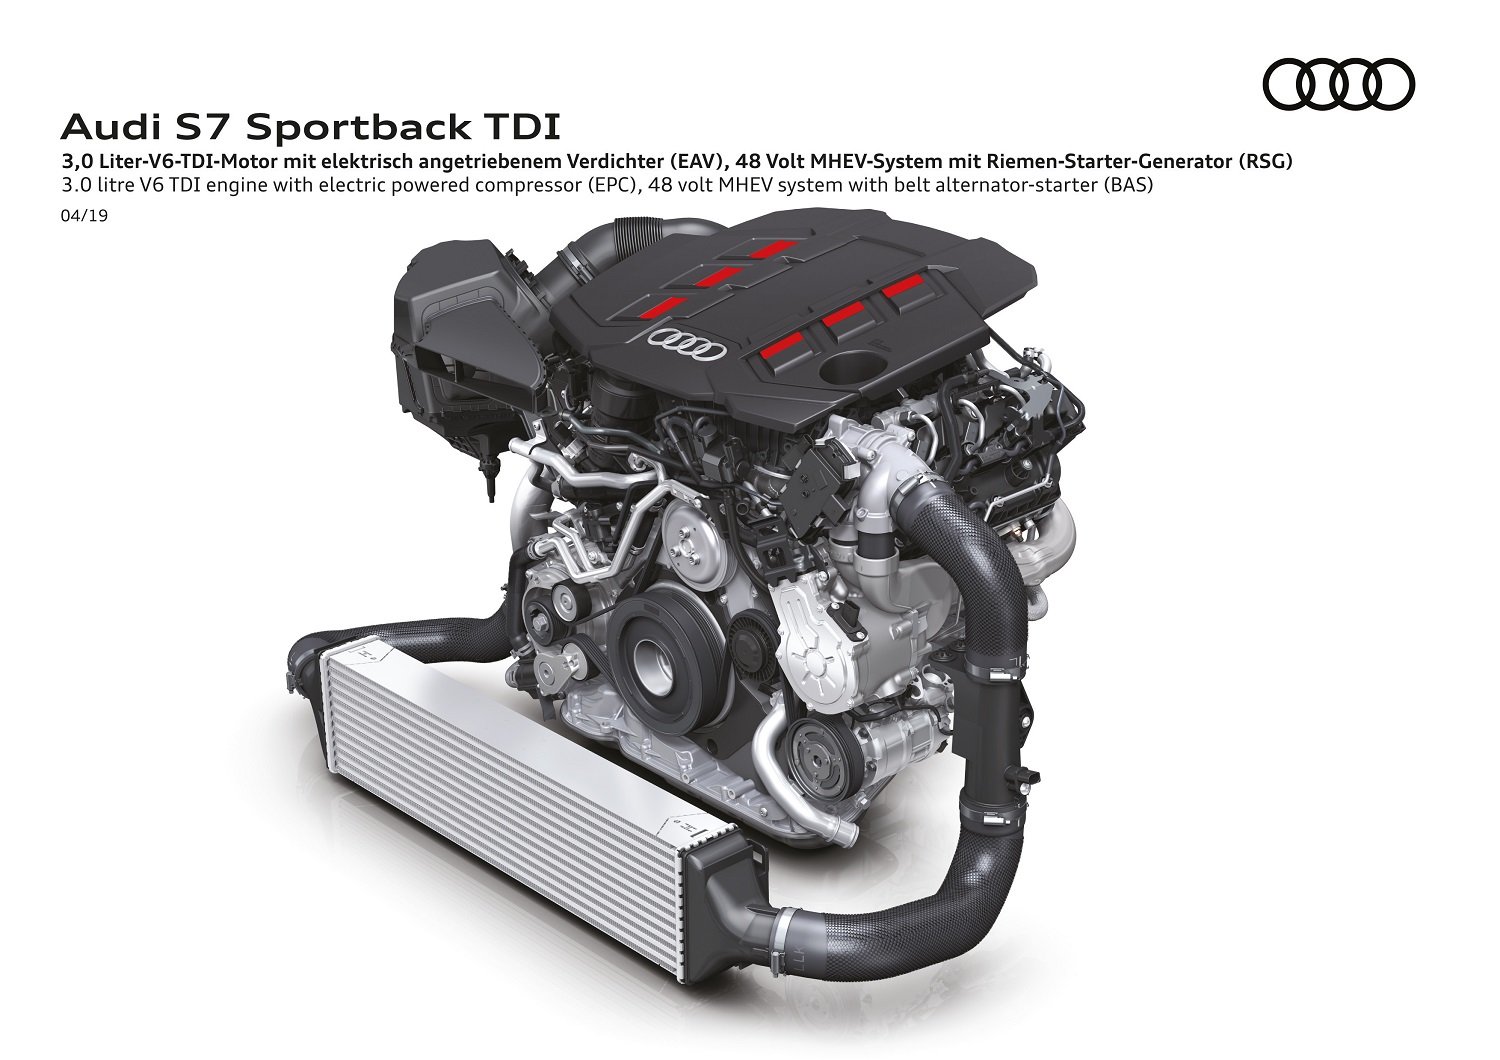 Audi S7 dostala motor V6 TDI